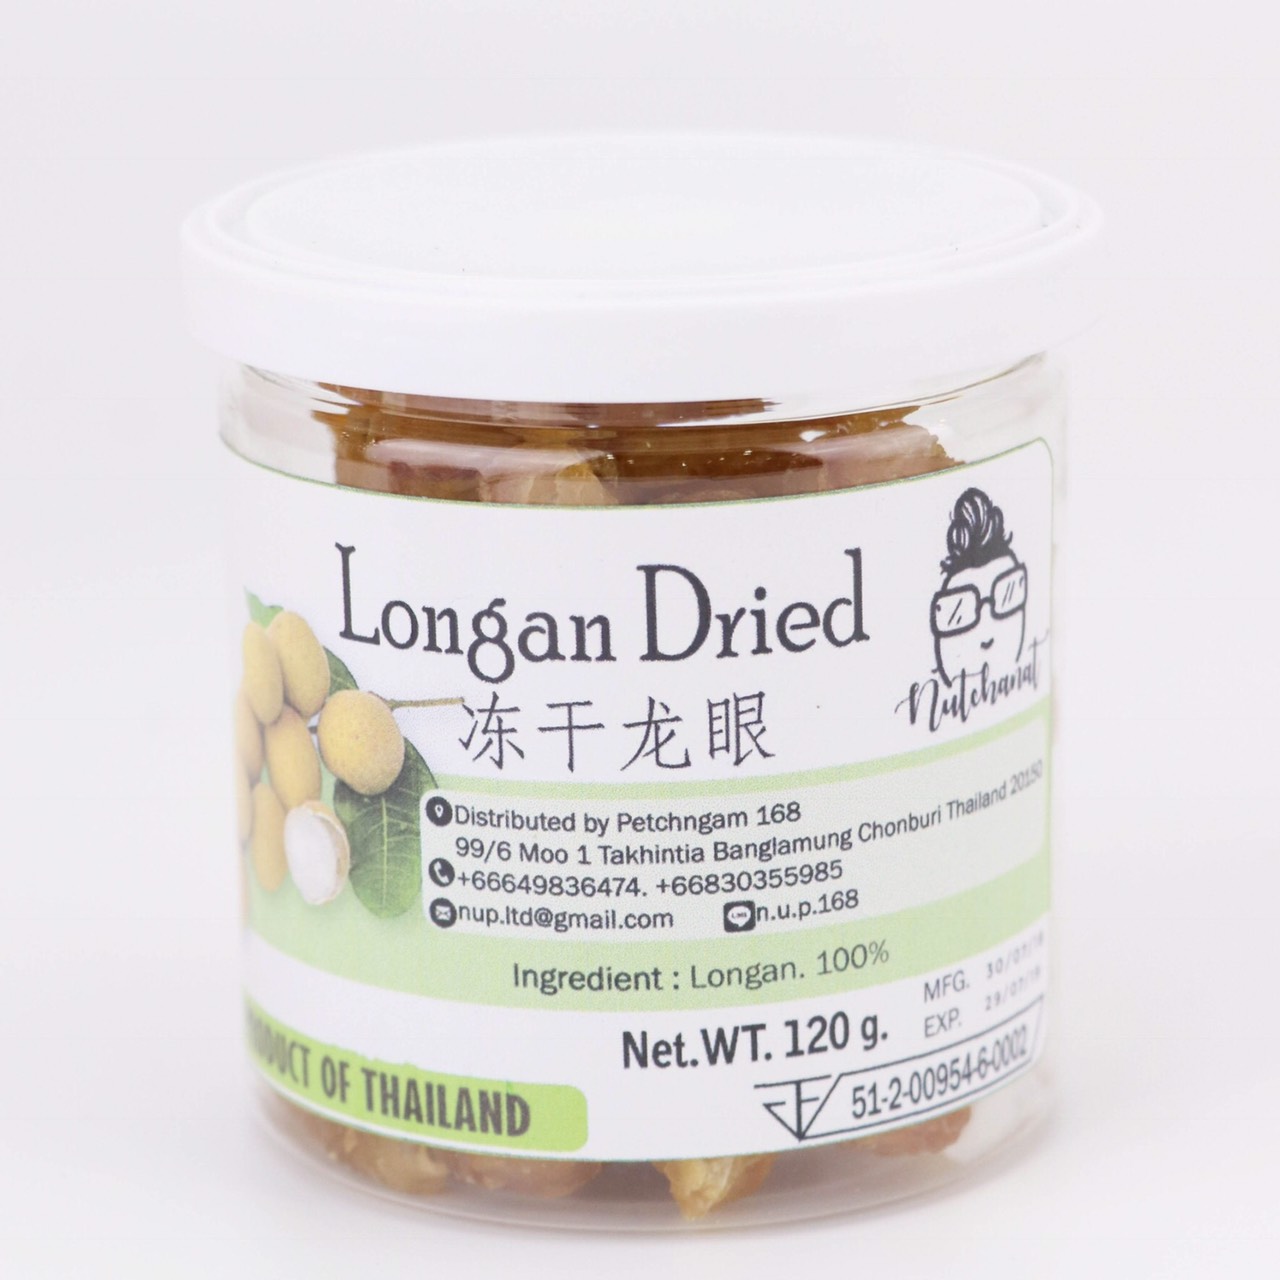 Dried longan